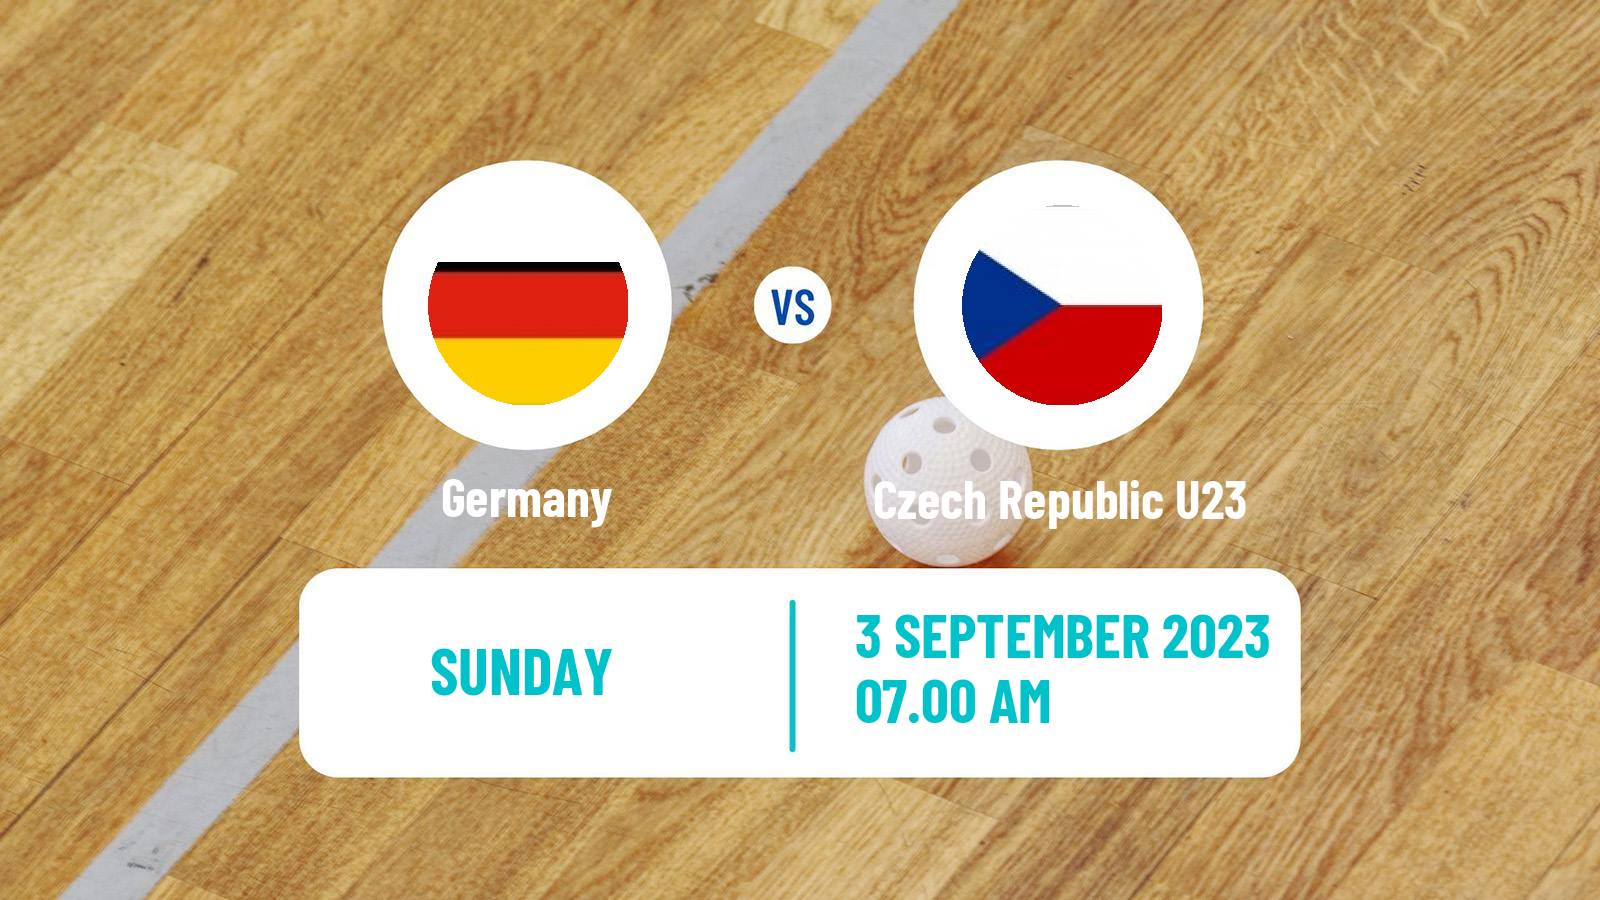 Floorball Friendly International Floorball Germany - Czech Republic U23